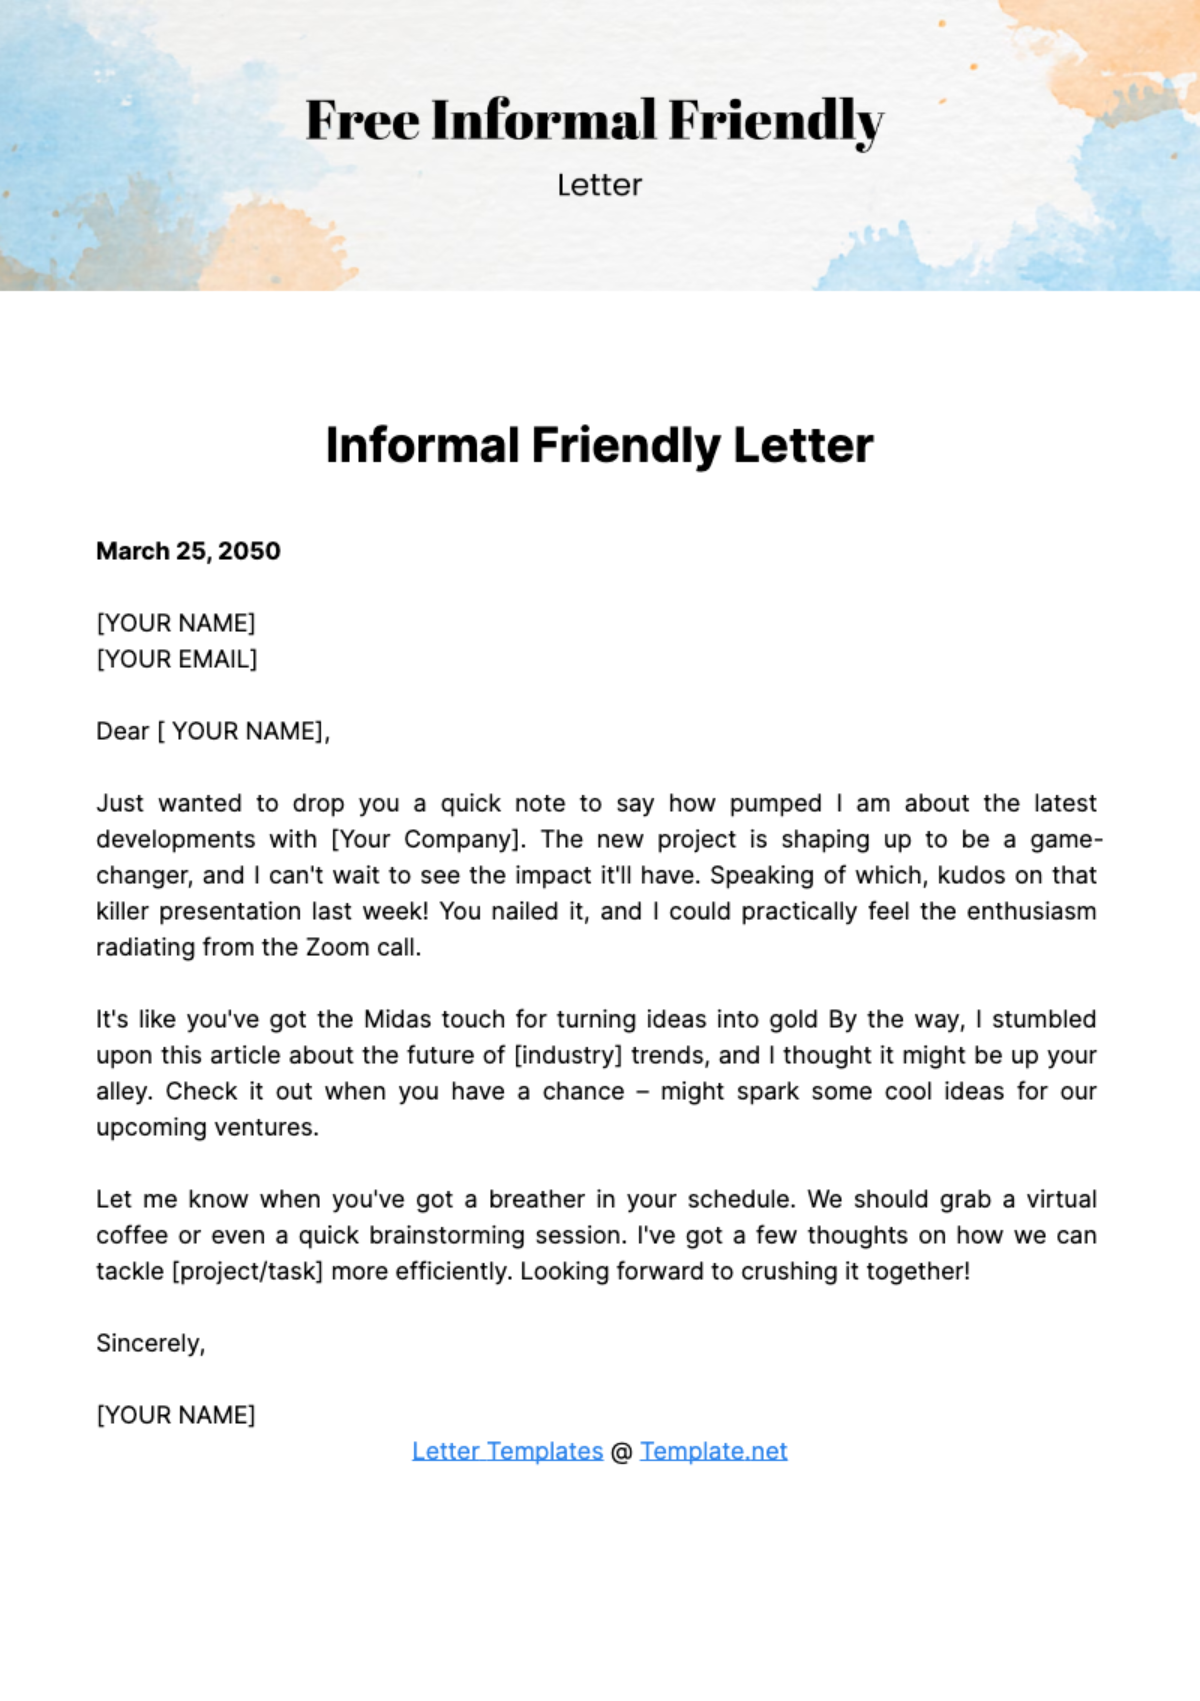 Free Informal Friendly Letter Template